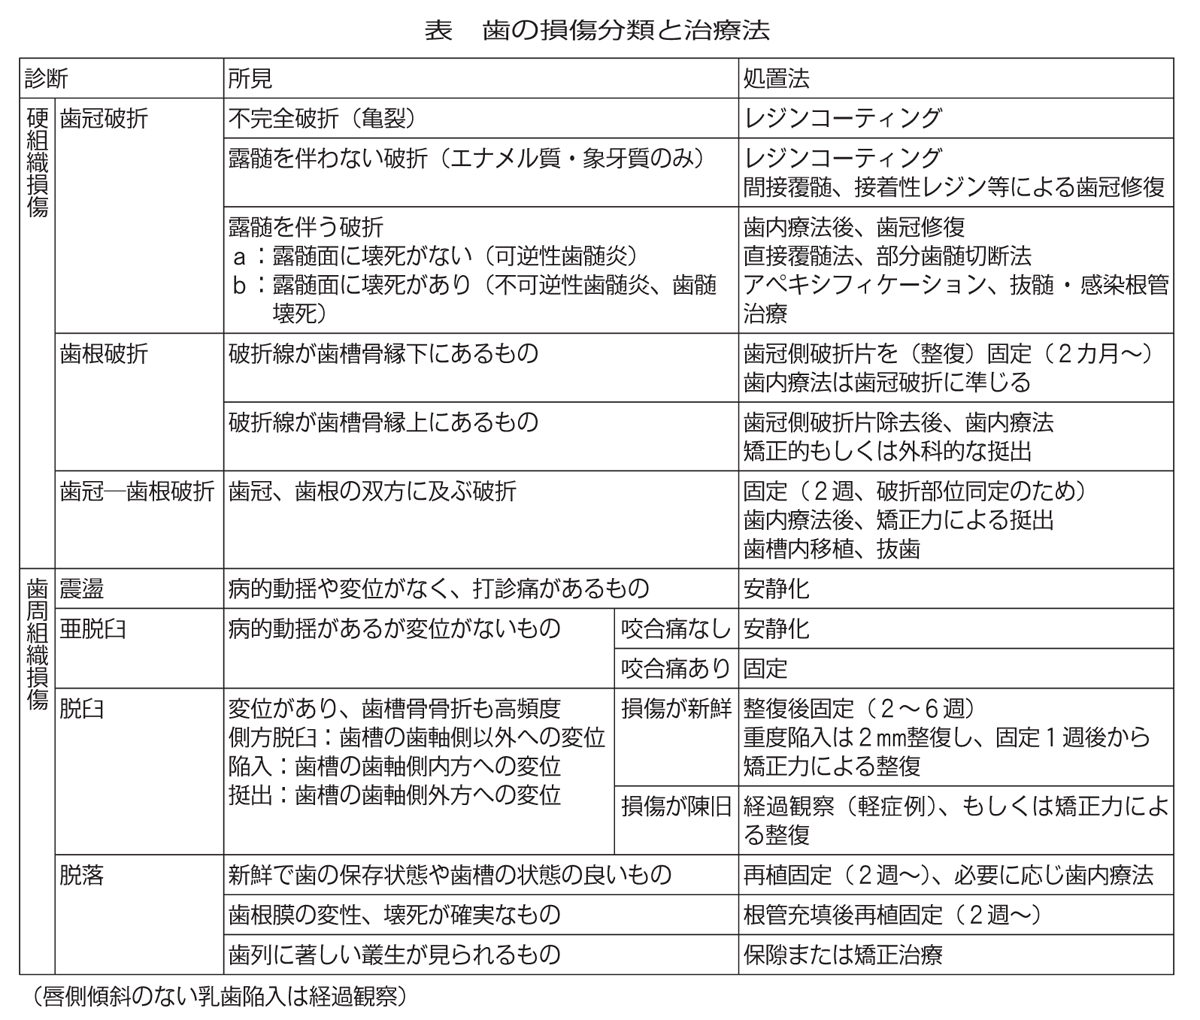 http://www.hhk.jp/gakujyutsu-kenkyu/2015/04/01/1779_2.gif